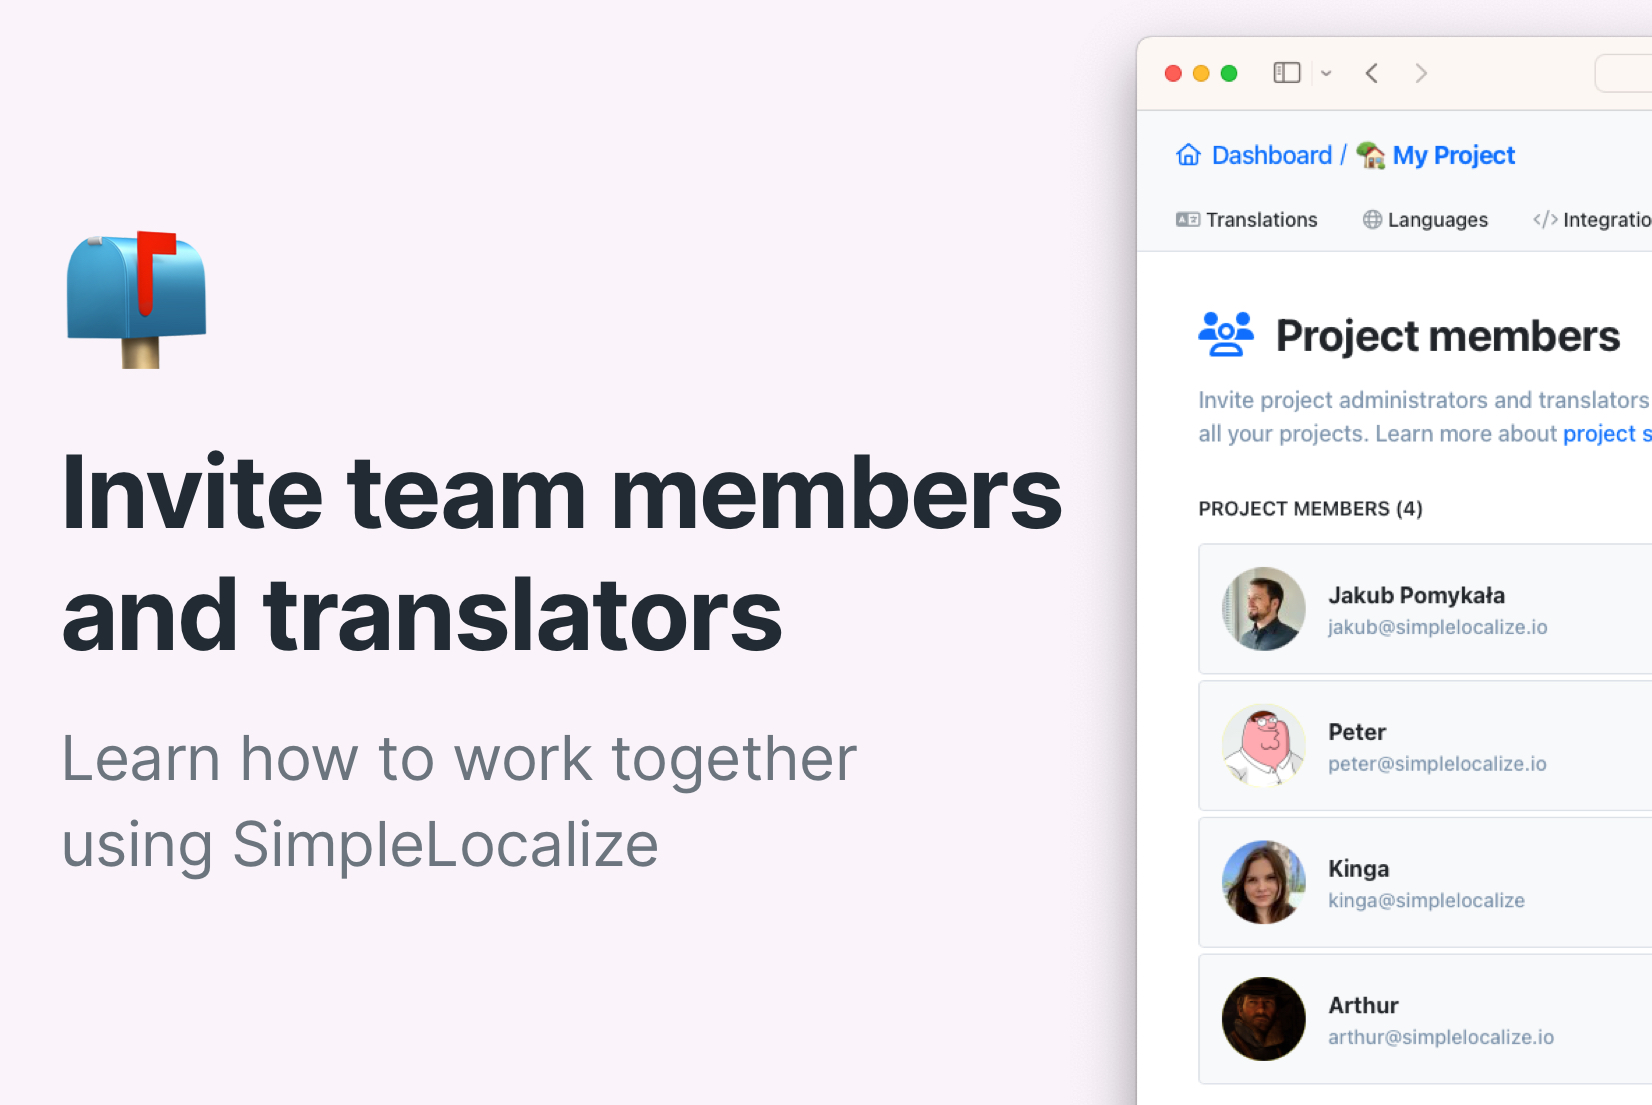 Getting started: Invite team members and translators